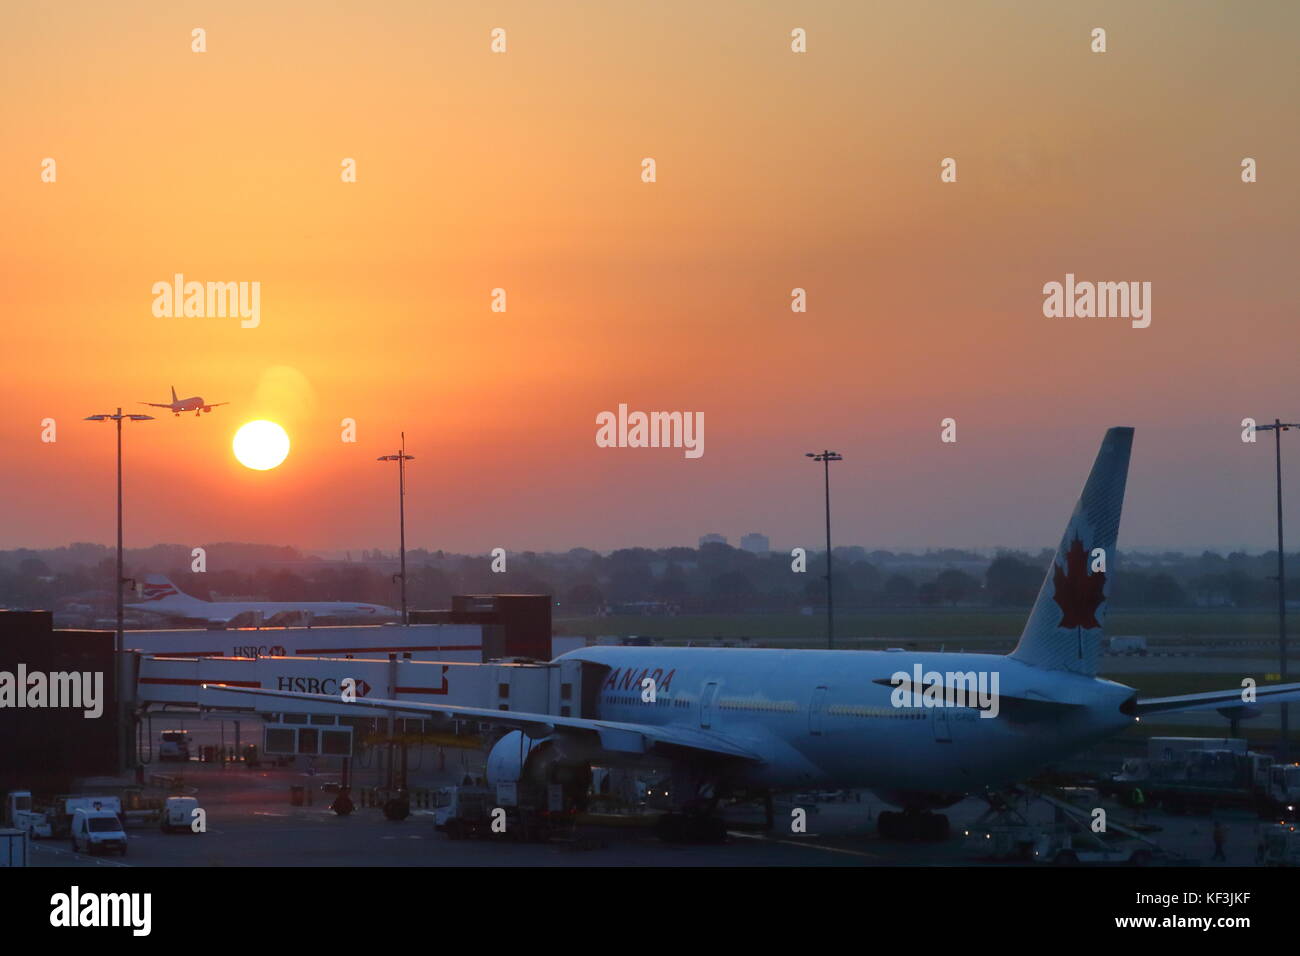 A plane landing at sunrise at London Heathrow Airport, UK Stock Photo